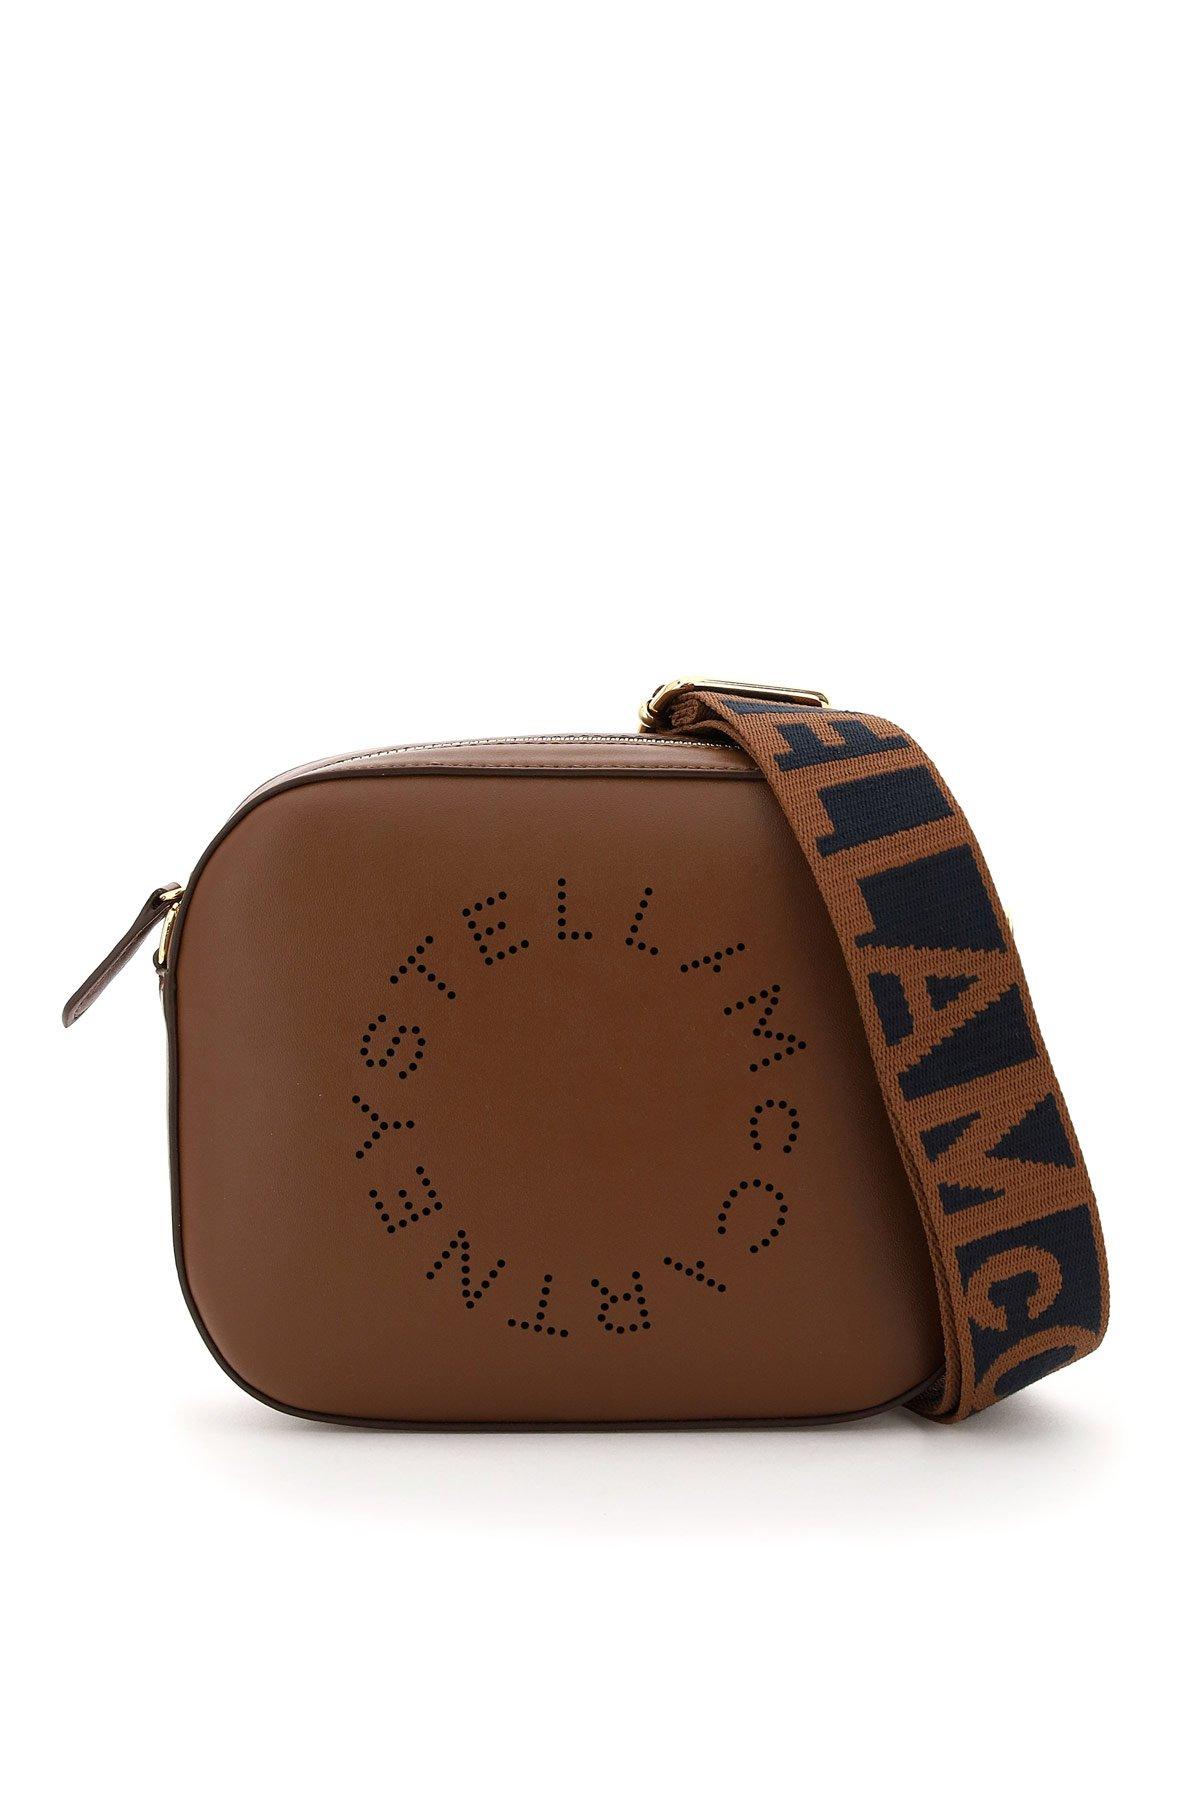 Stella McCartney Camera Bag With Perforated Stella Logo in 